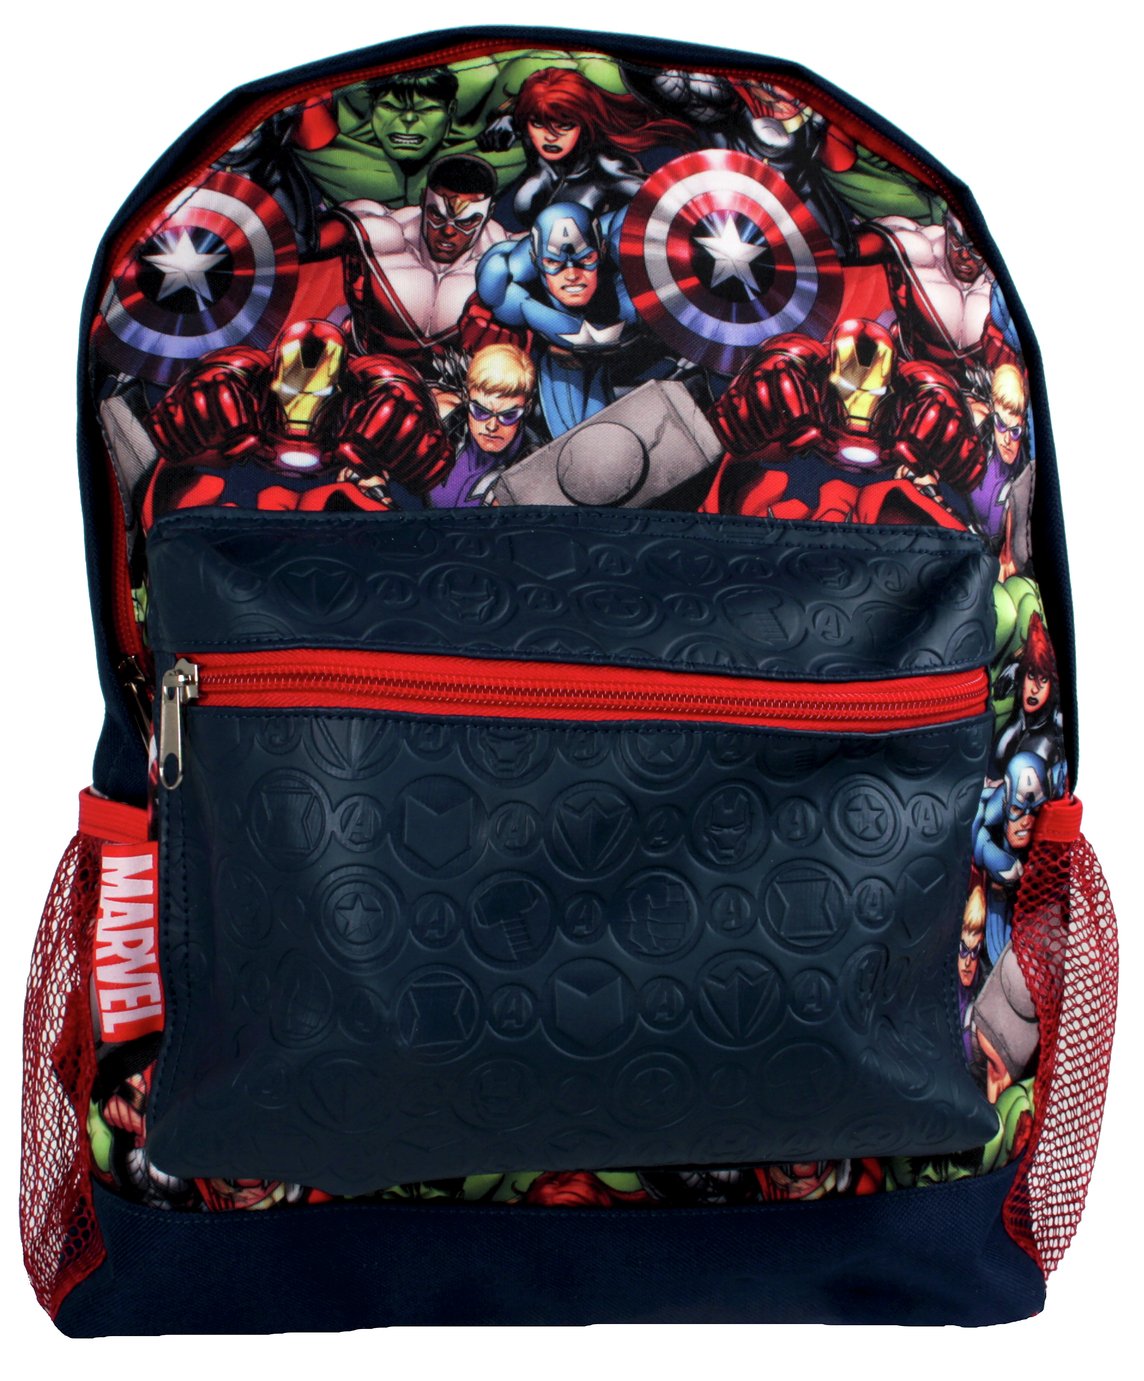 Marvel Avengers 6L Backpack Review